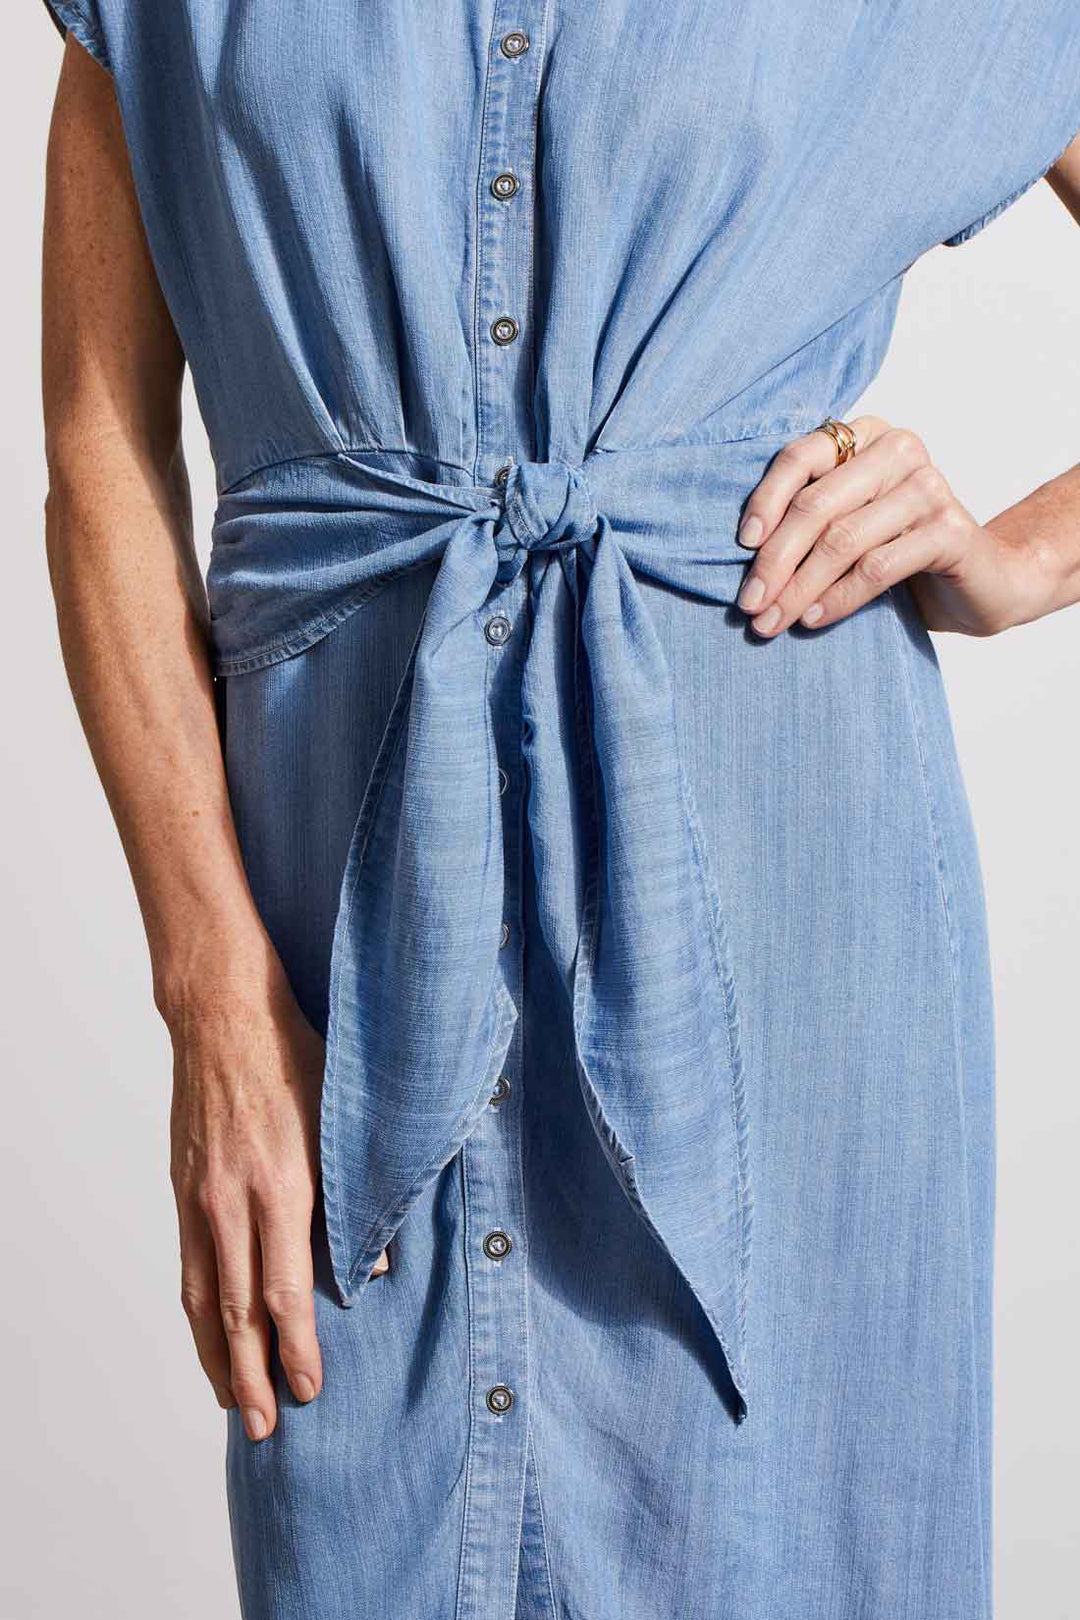 SHIRT DRESS W/FRONT WRAP DETAIL - TIDE BLUE